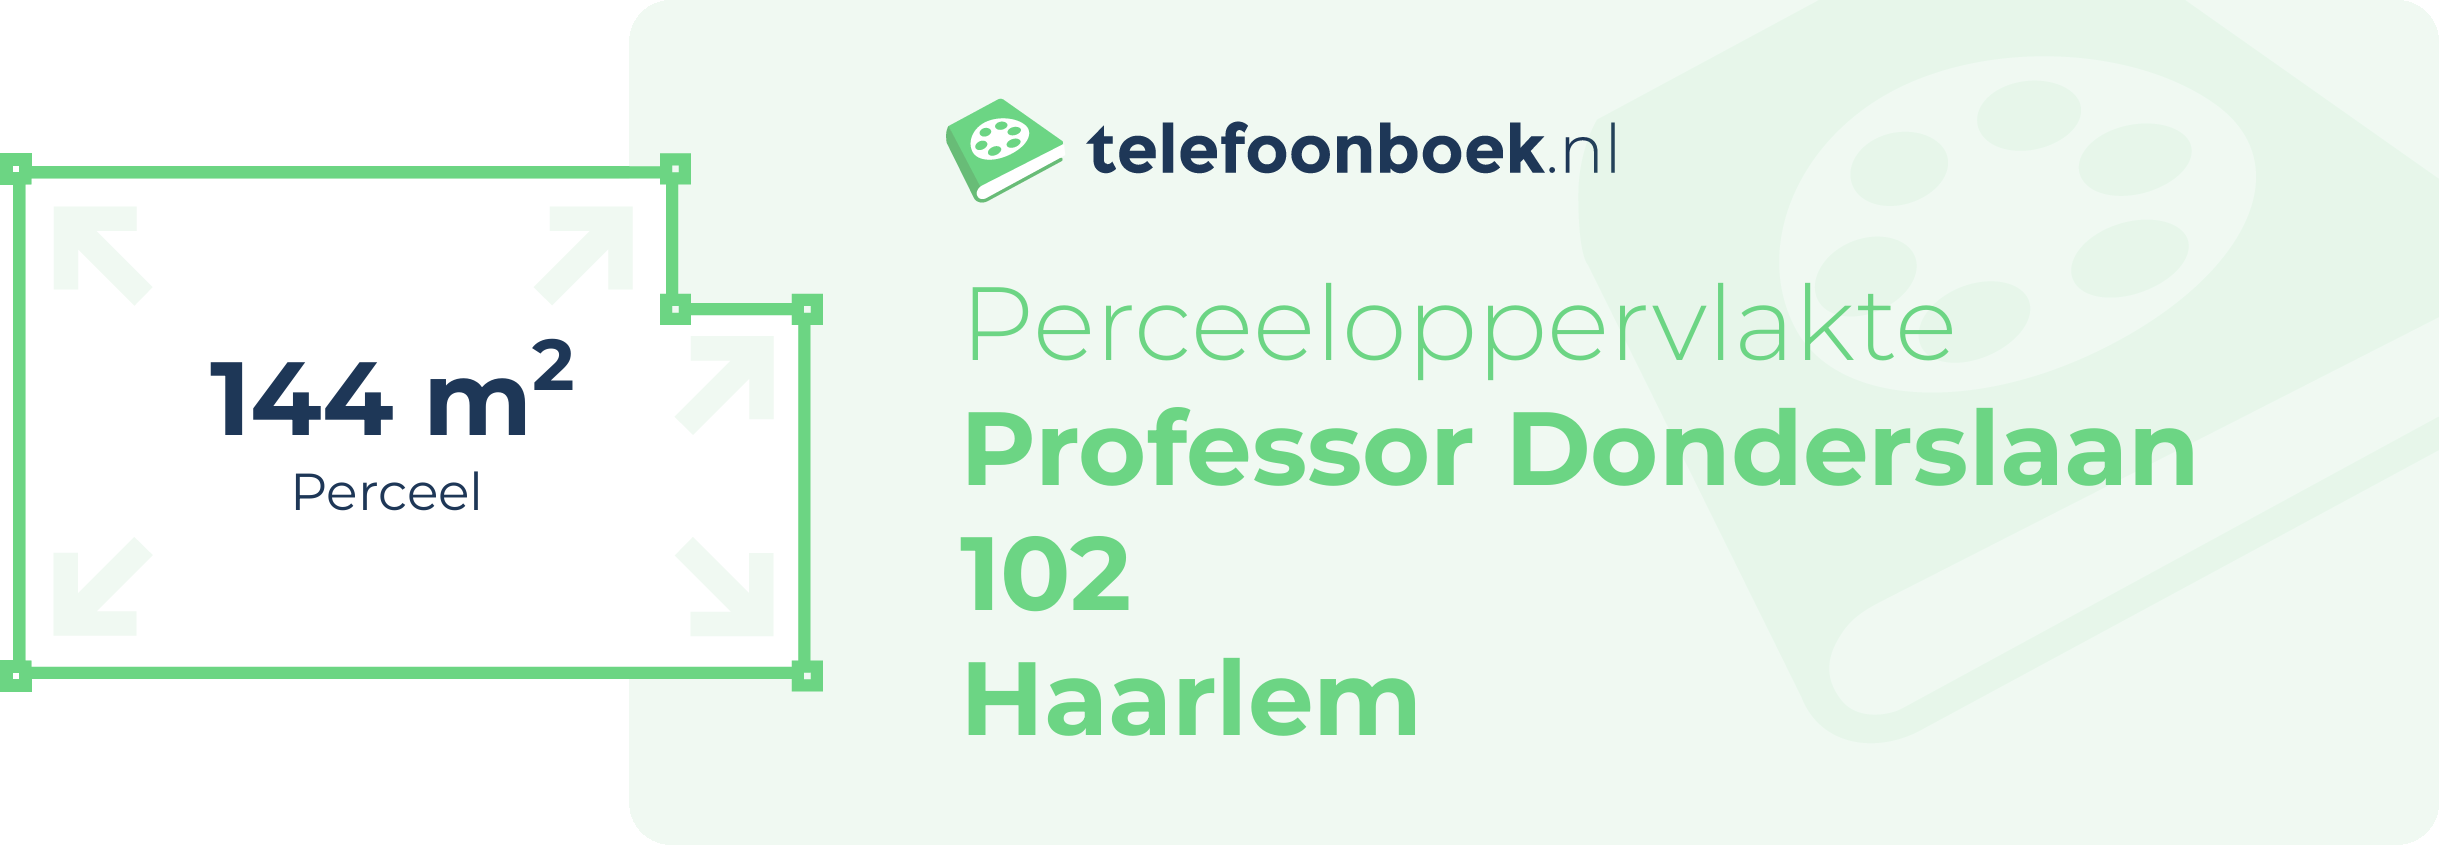 Perceeloppervlakte Professor Donderslaan 102 Haarlem